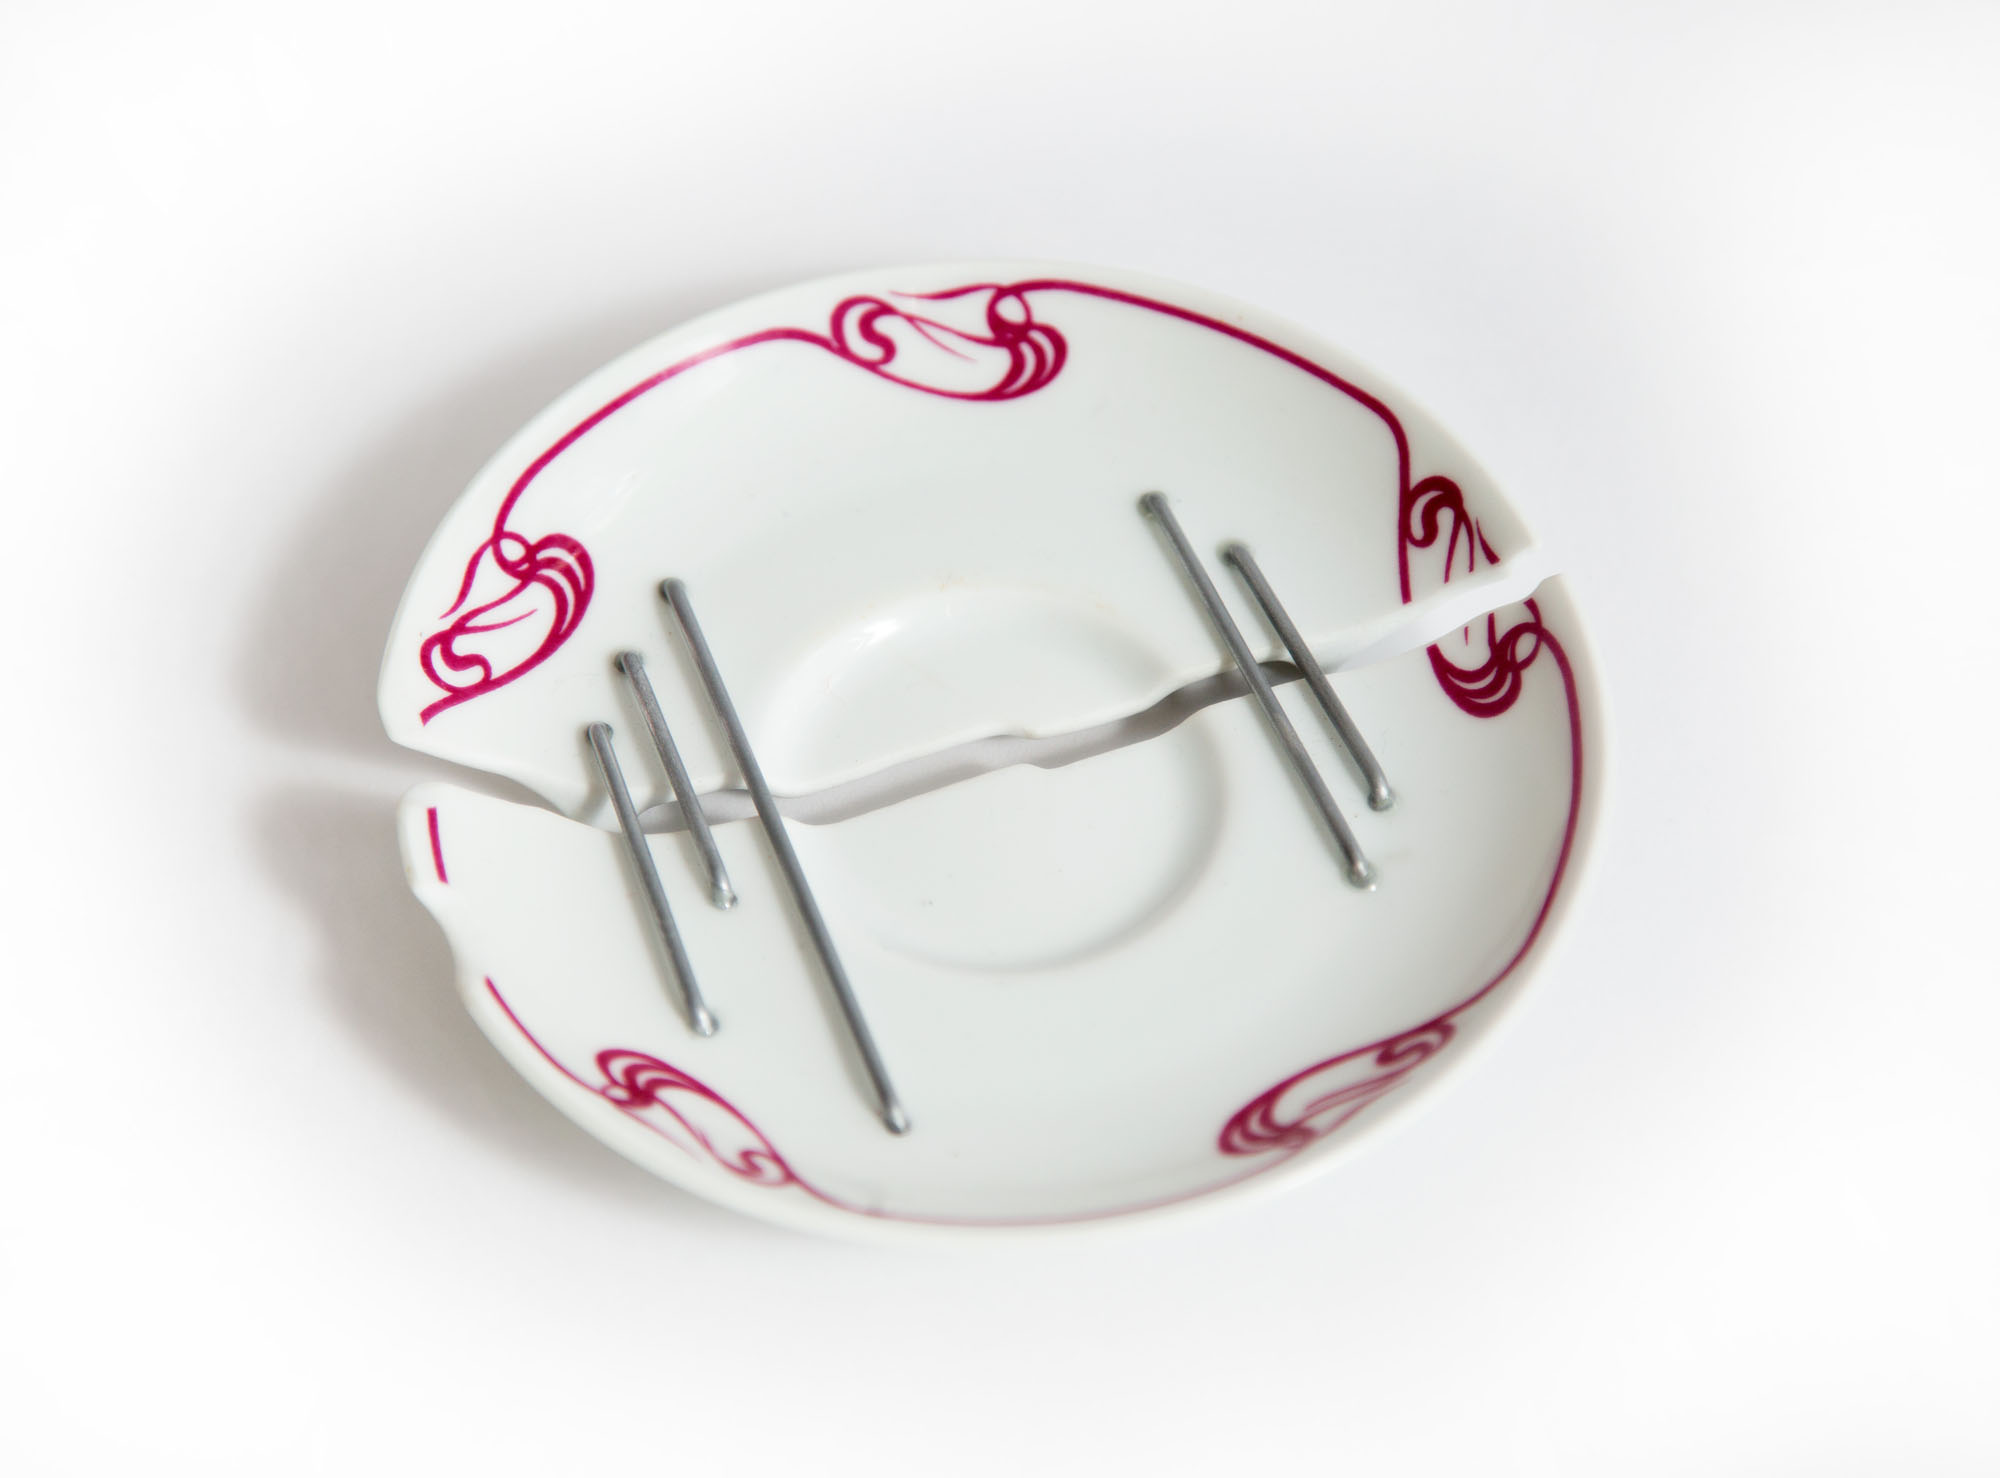 an image of a porcelain saucer stapled together 